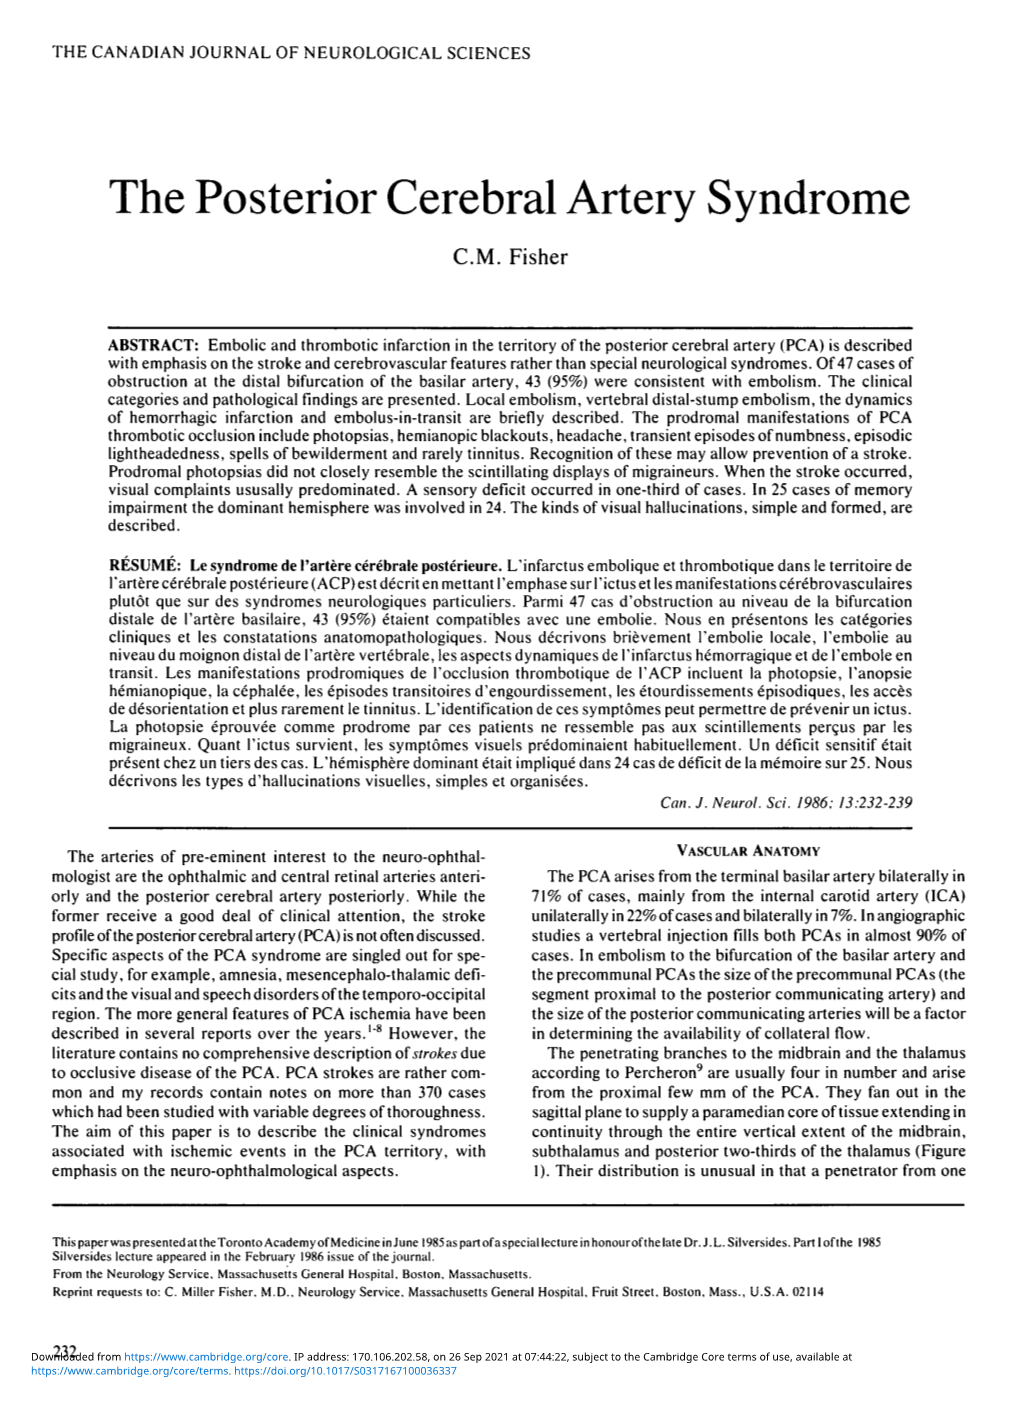 The Posterior Cerebral Artery Syndrome